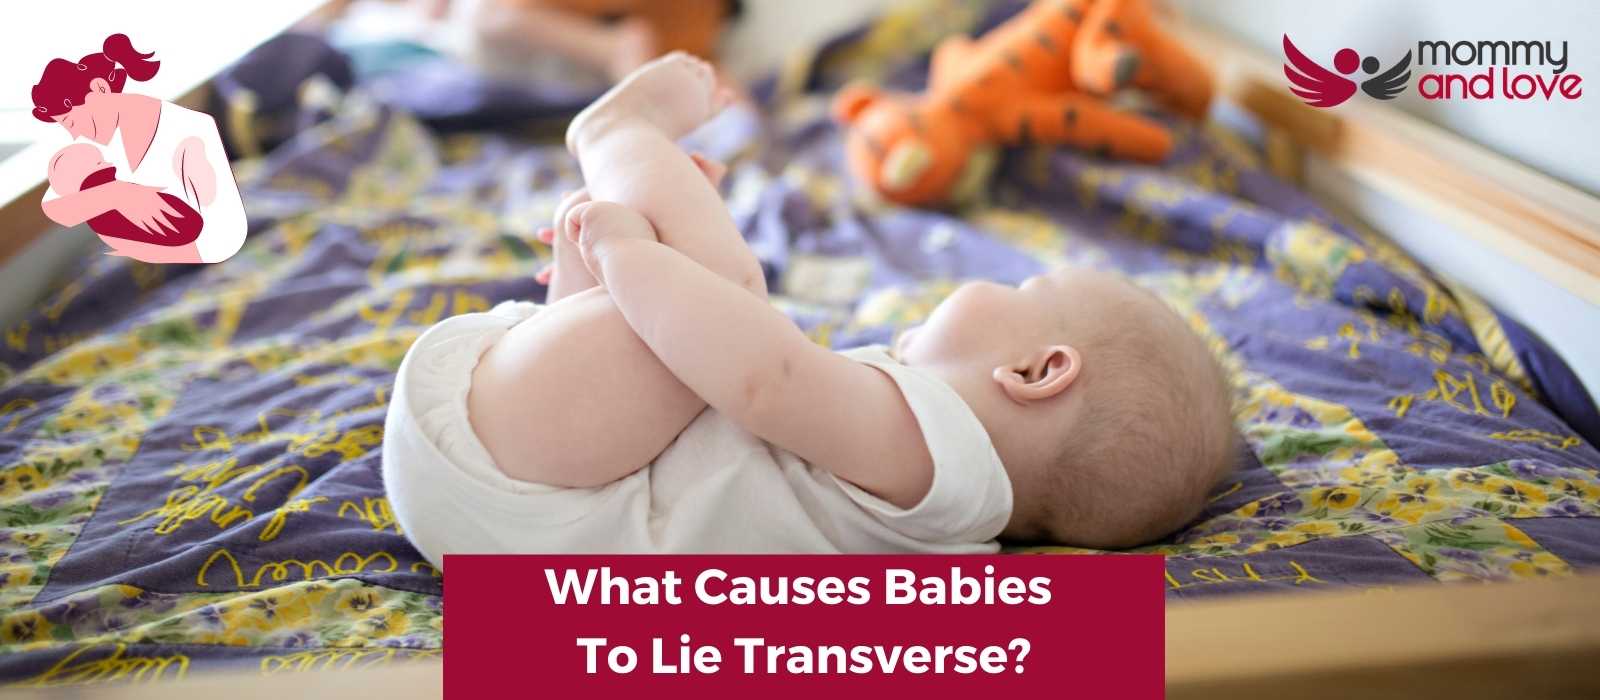 What Causes Babies To Lie Transverse